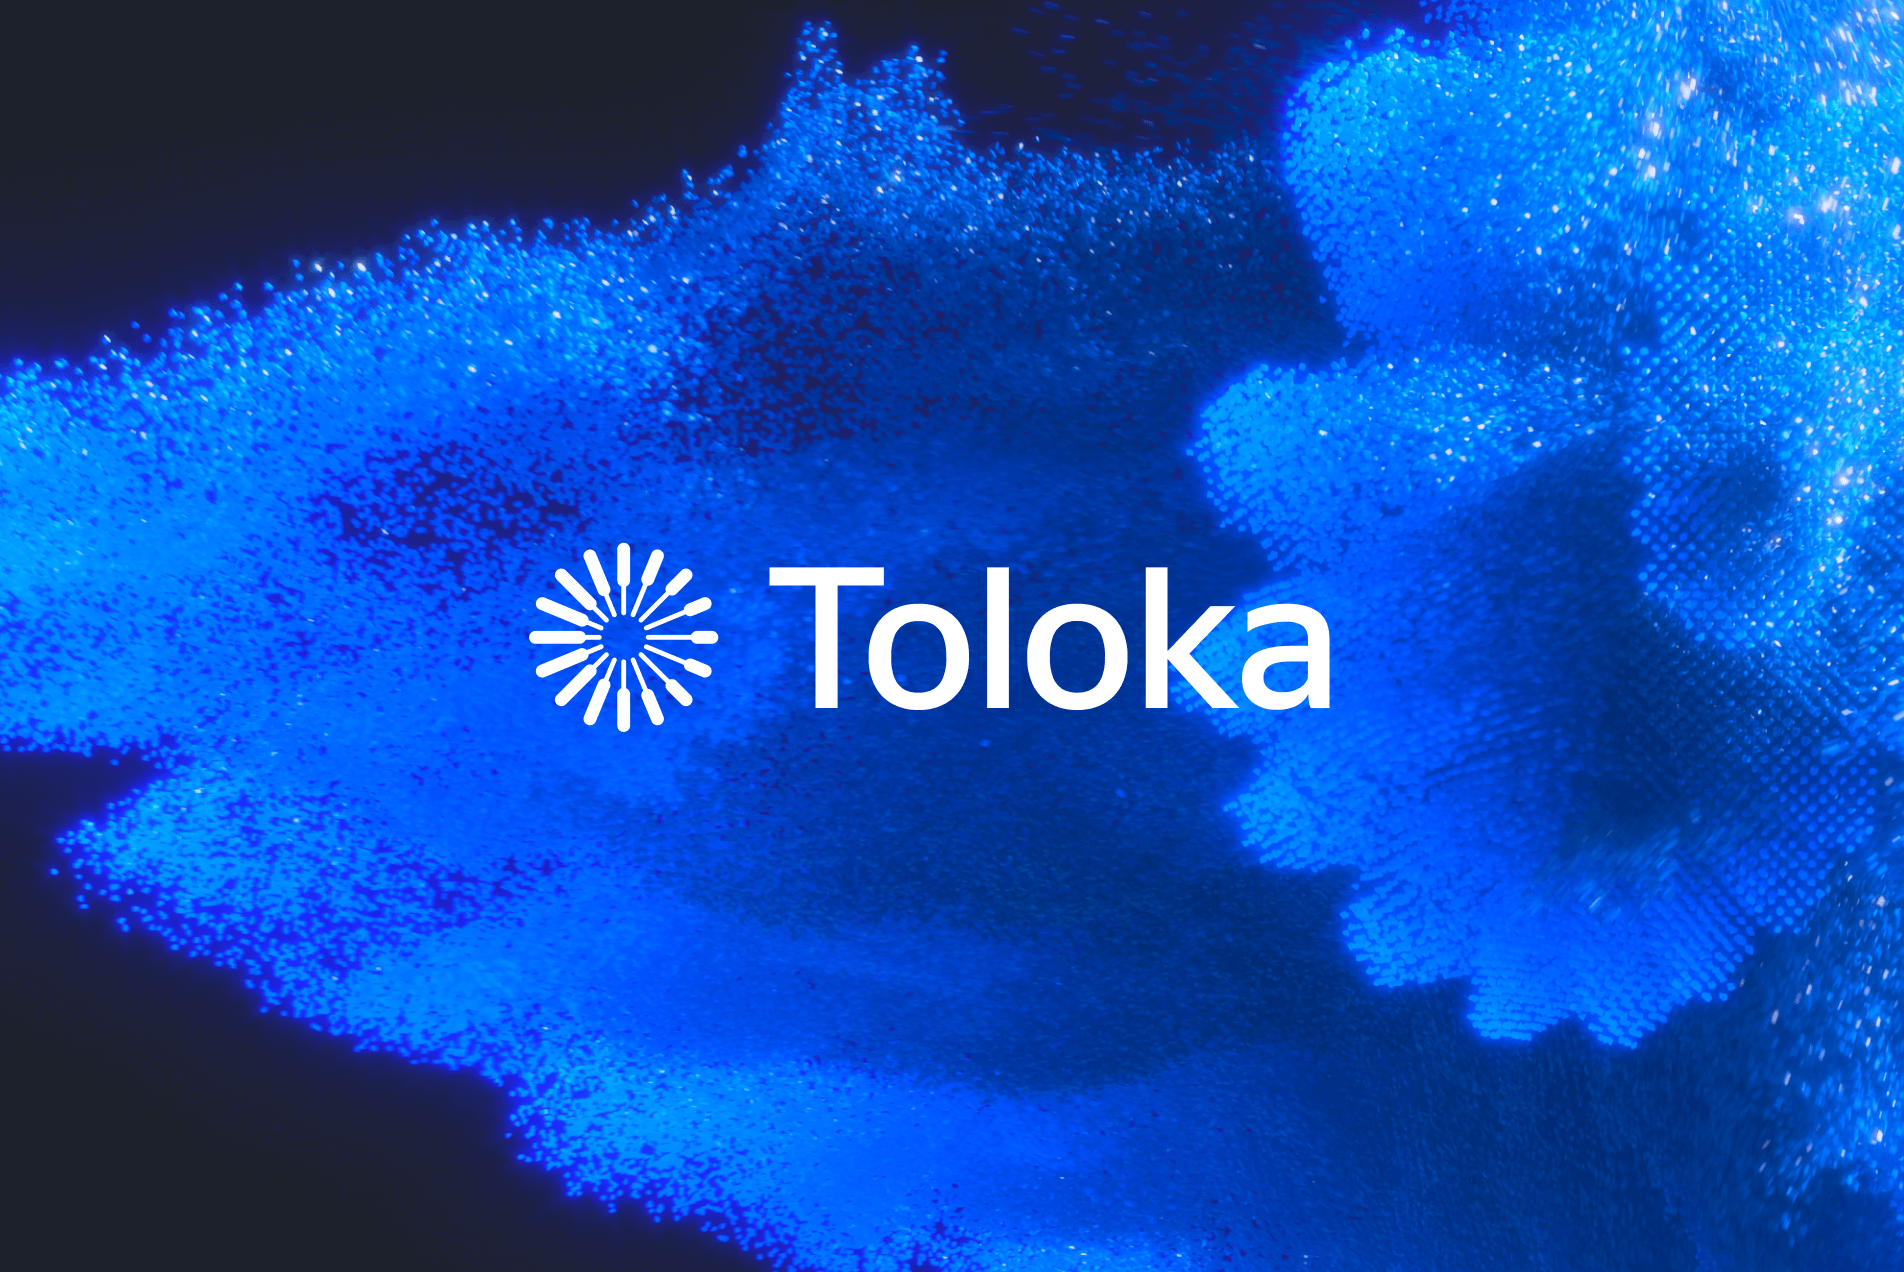 Toloka’s digital universe: Brand Identity & Website